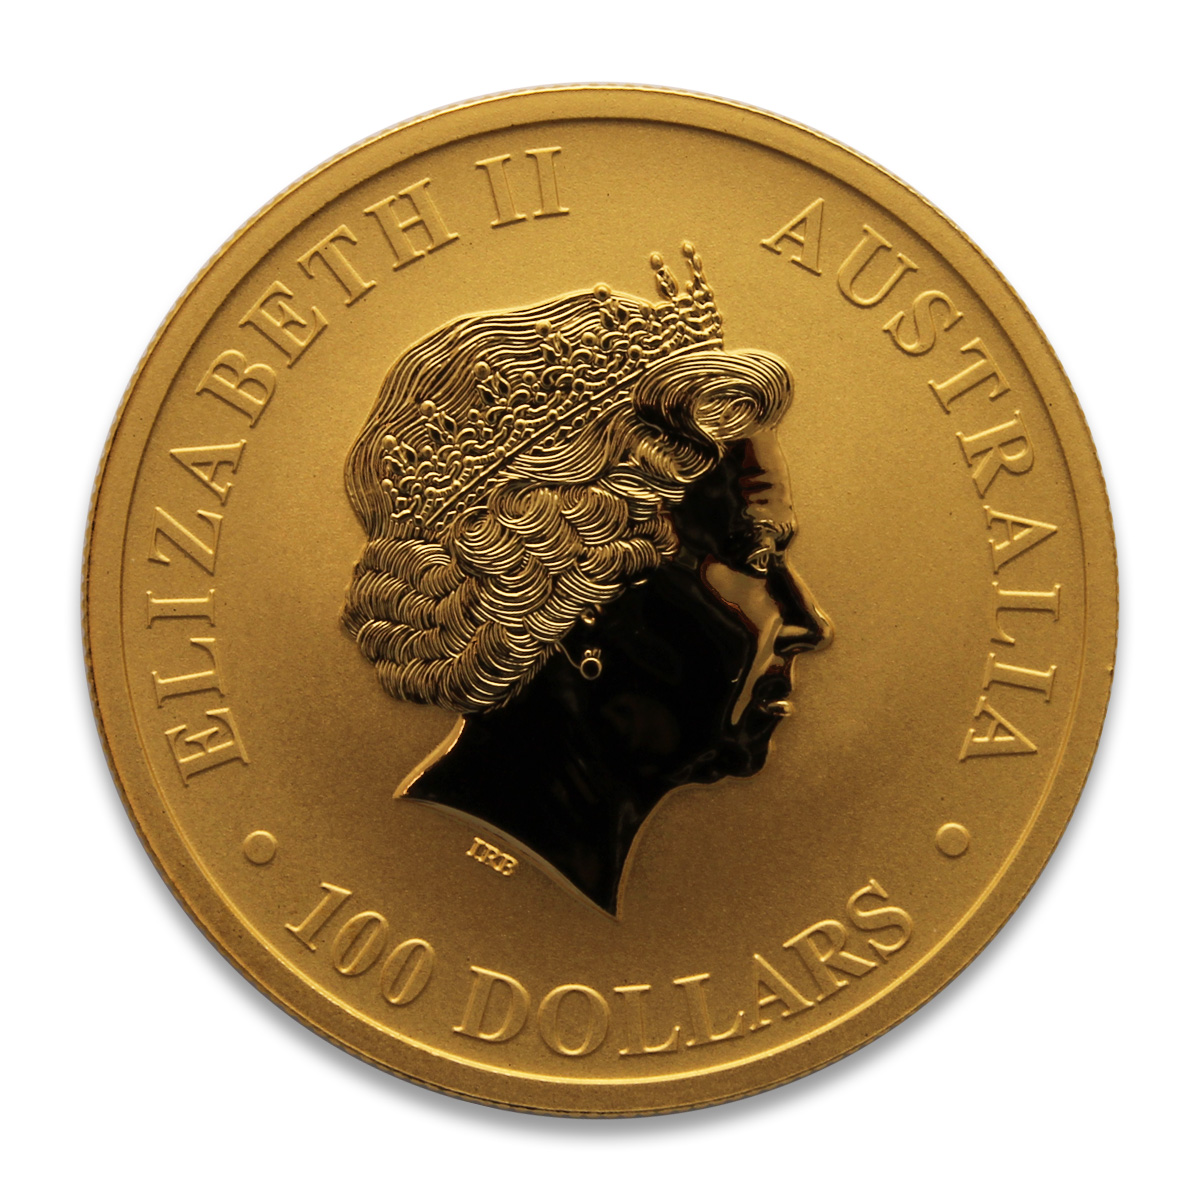 2012 1 oz Australian Nugget Gold Coin